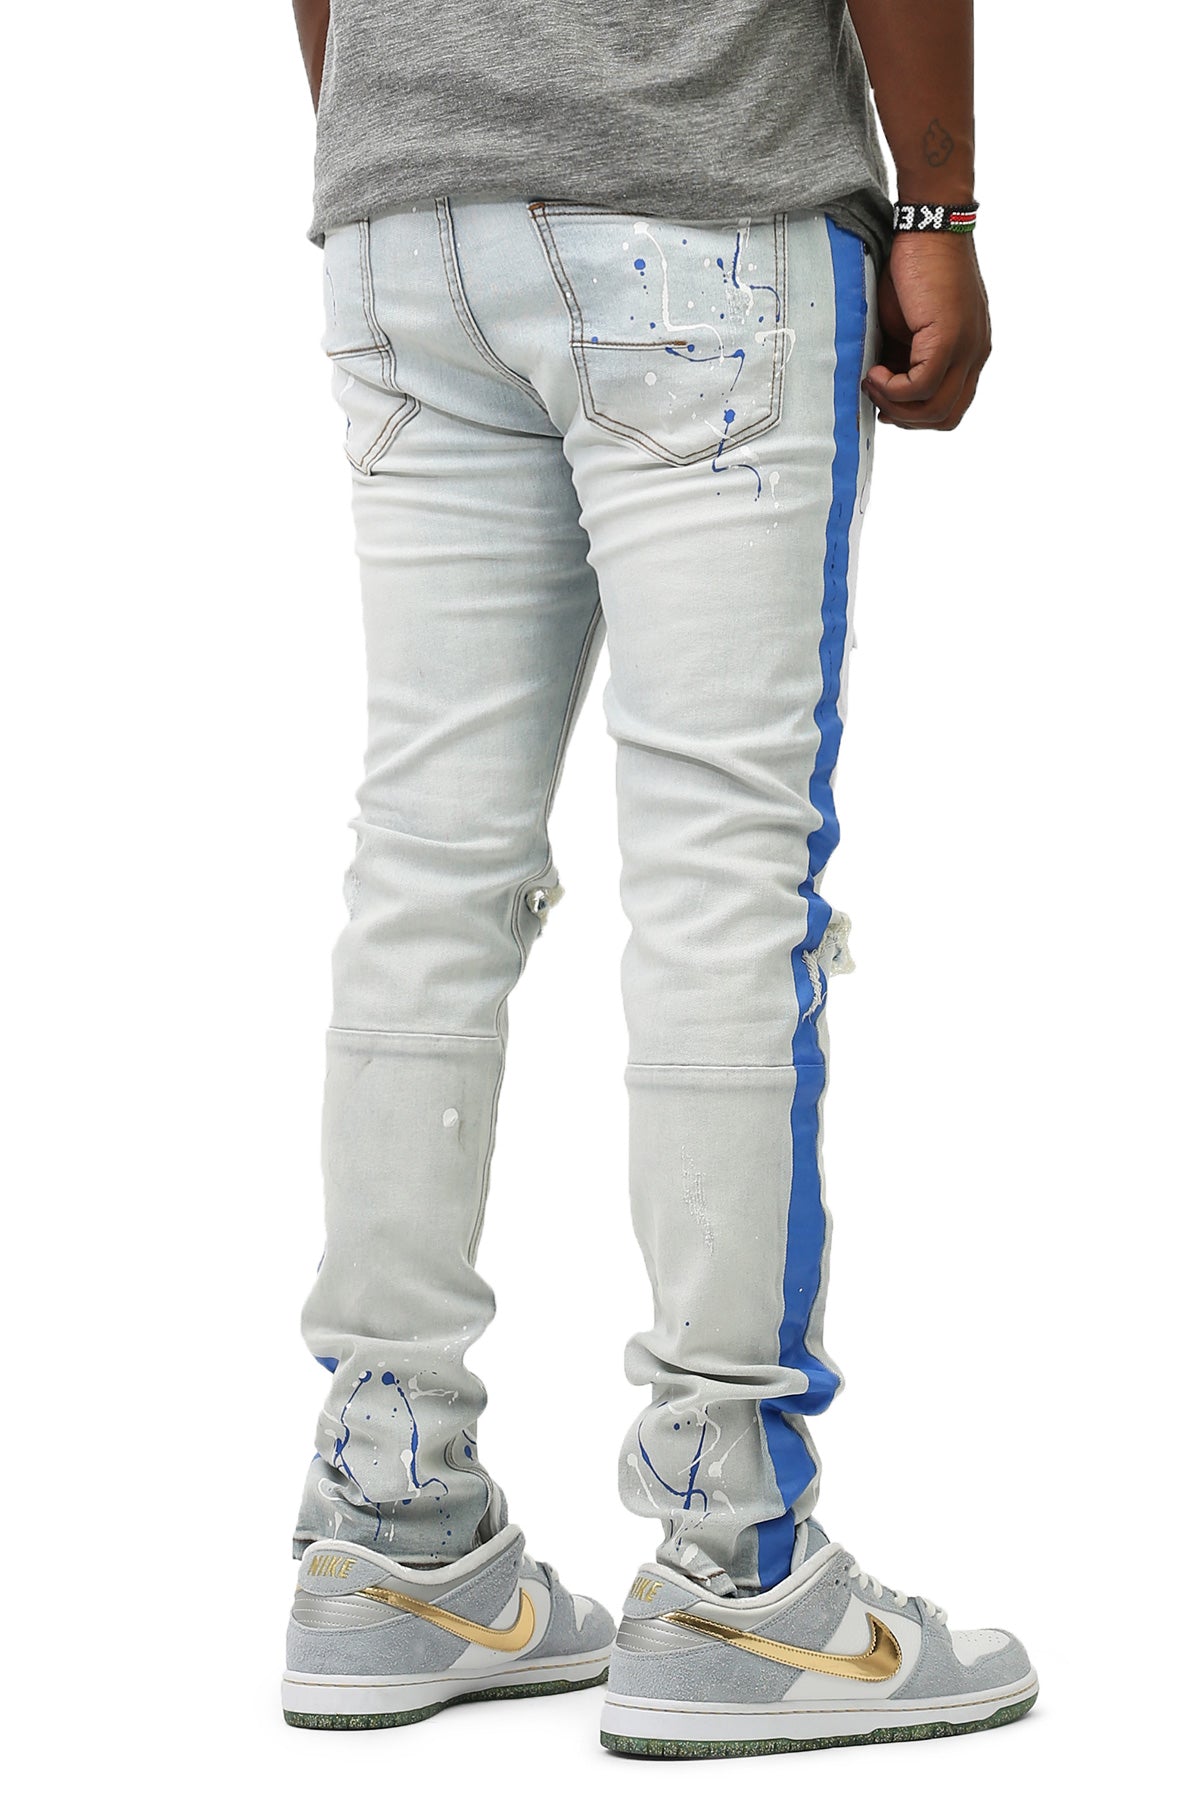 Paint Striped Jeans With Paint Splatter (Blue) (4417756954726)